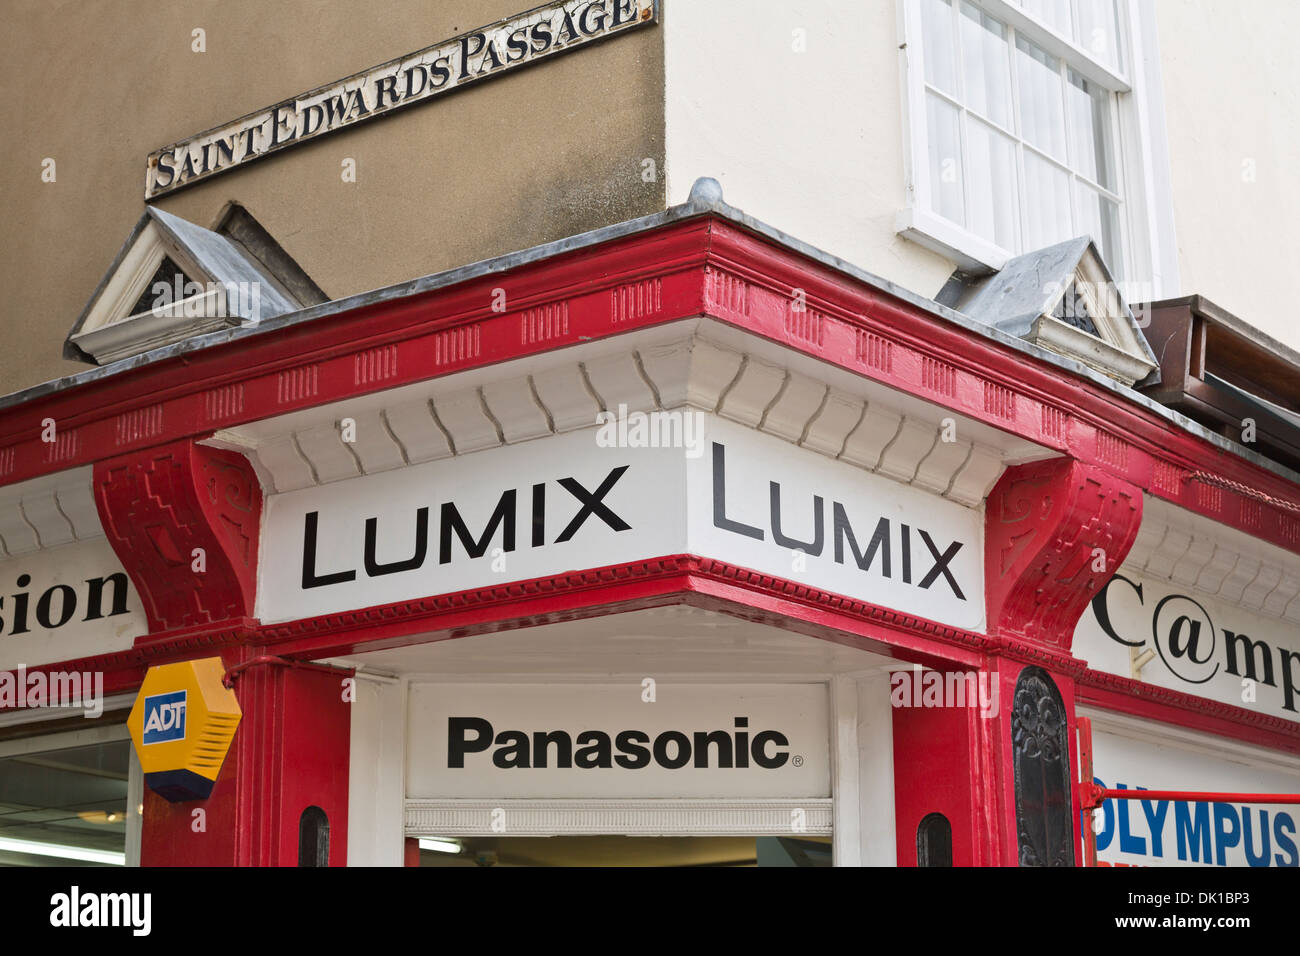 Panasonic Lumix sign on shop in Cambridge, England Stock Photo